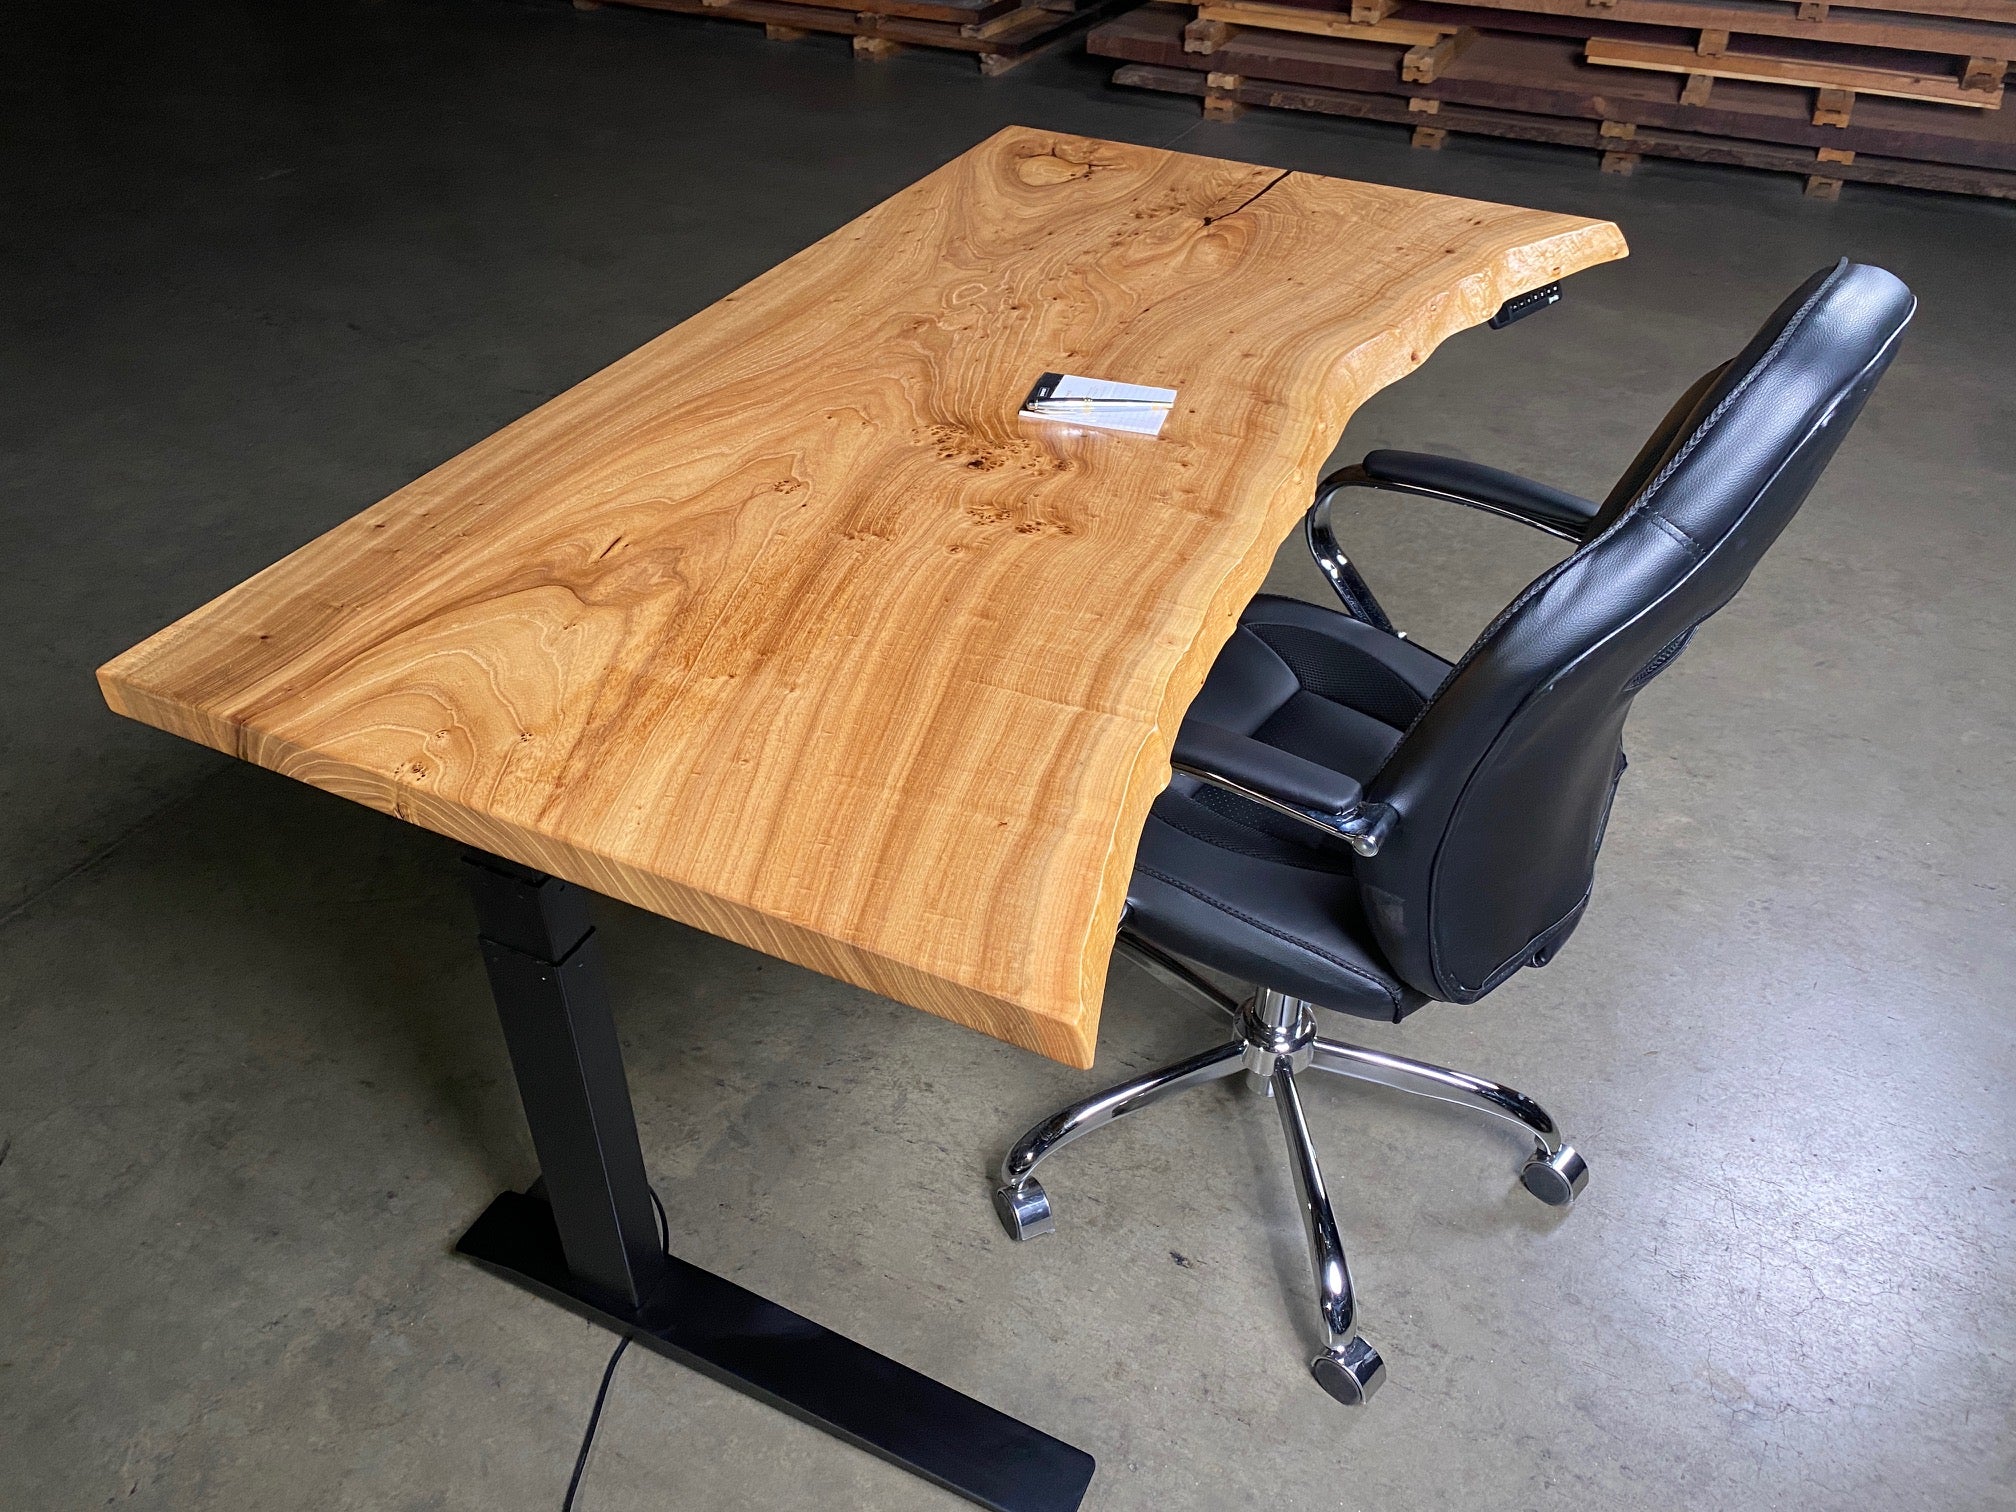 Elm live edge slab sit to stand adjustable height desk